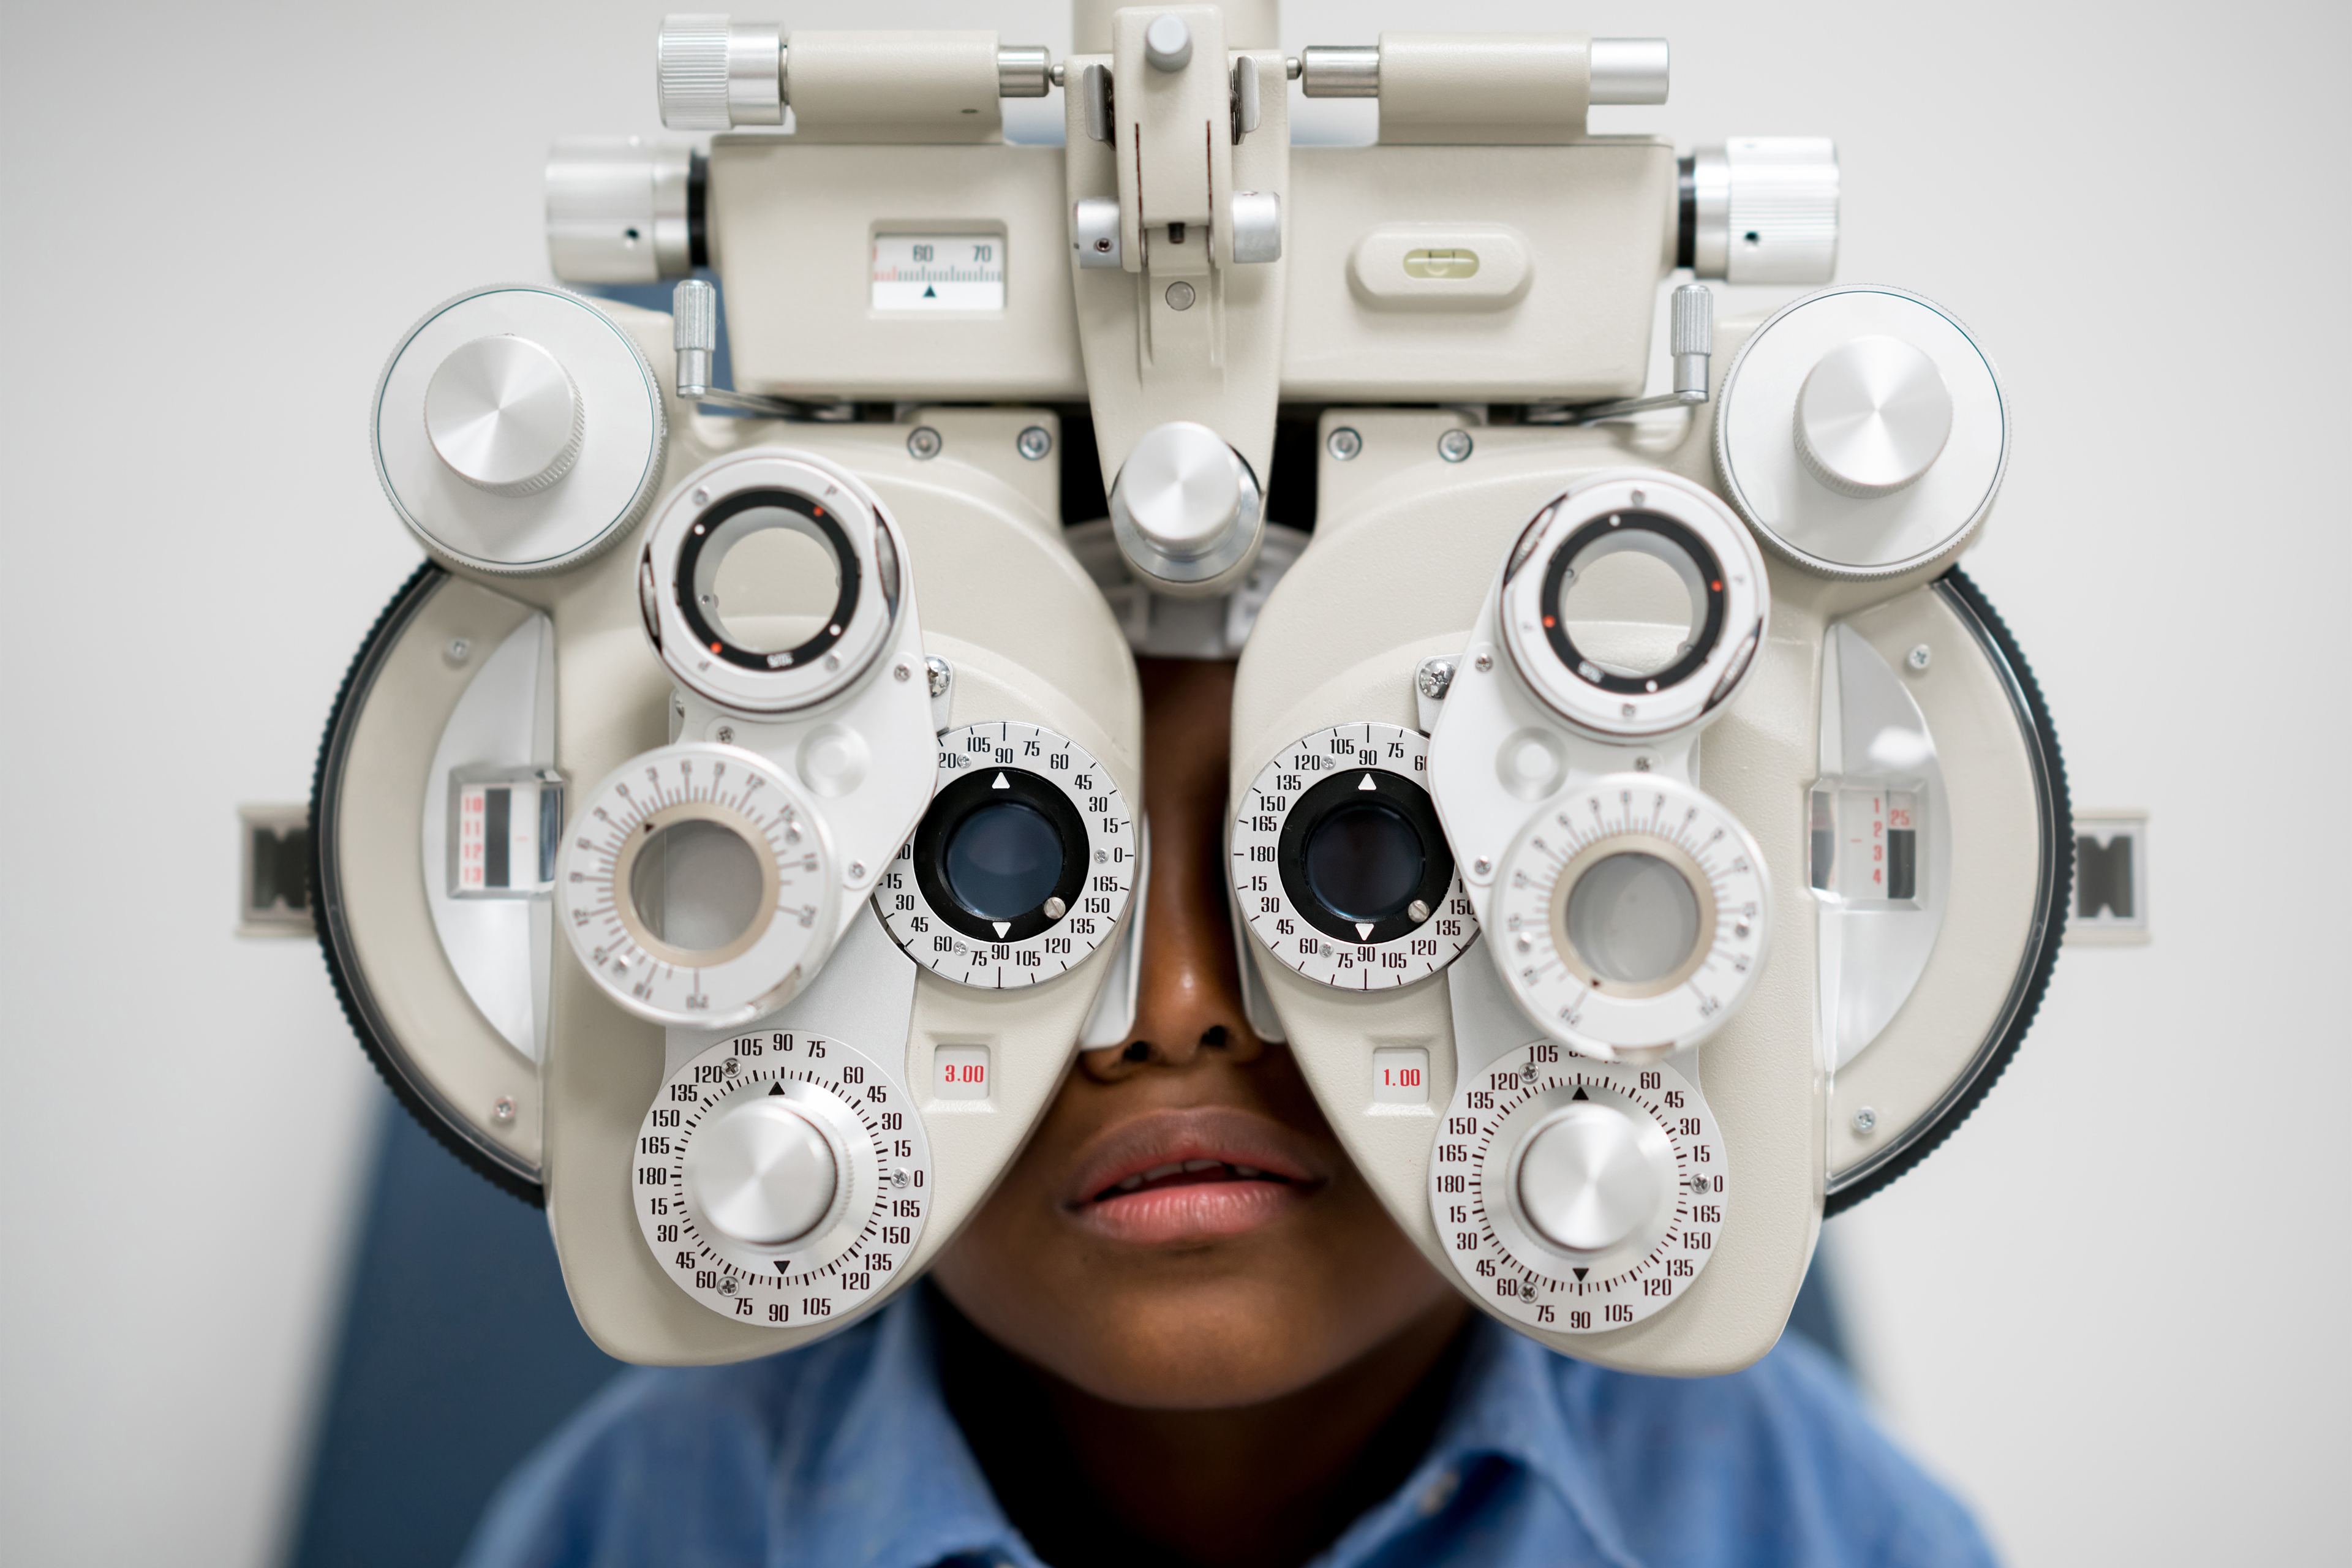 Children’s Vision Problems Often Go Undetected, Despite Calls for Regular Screening